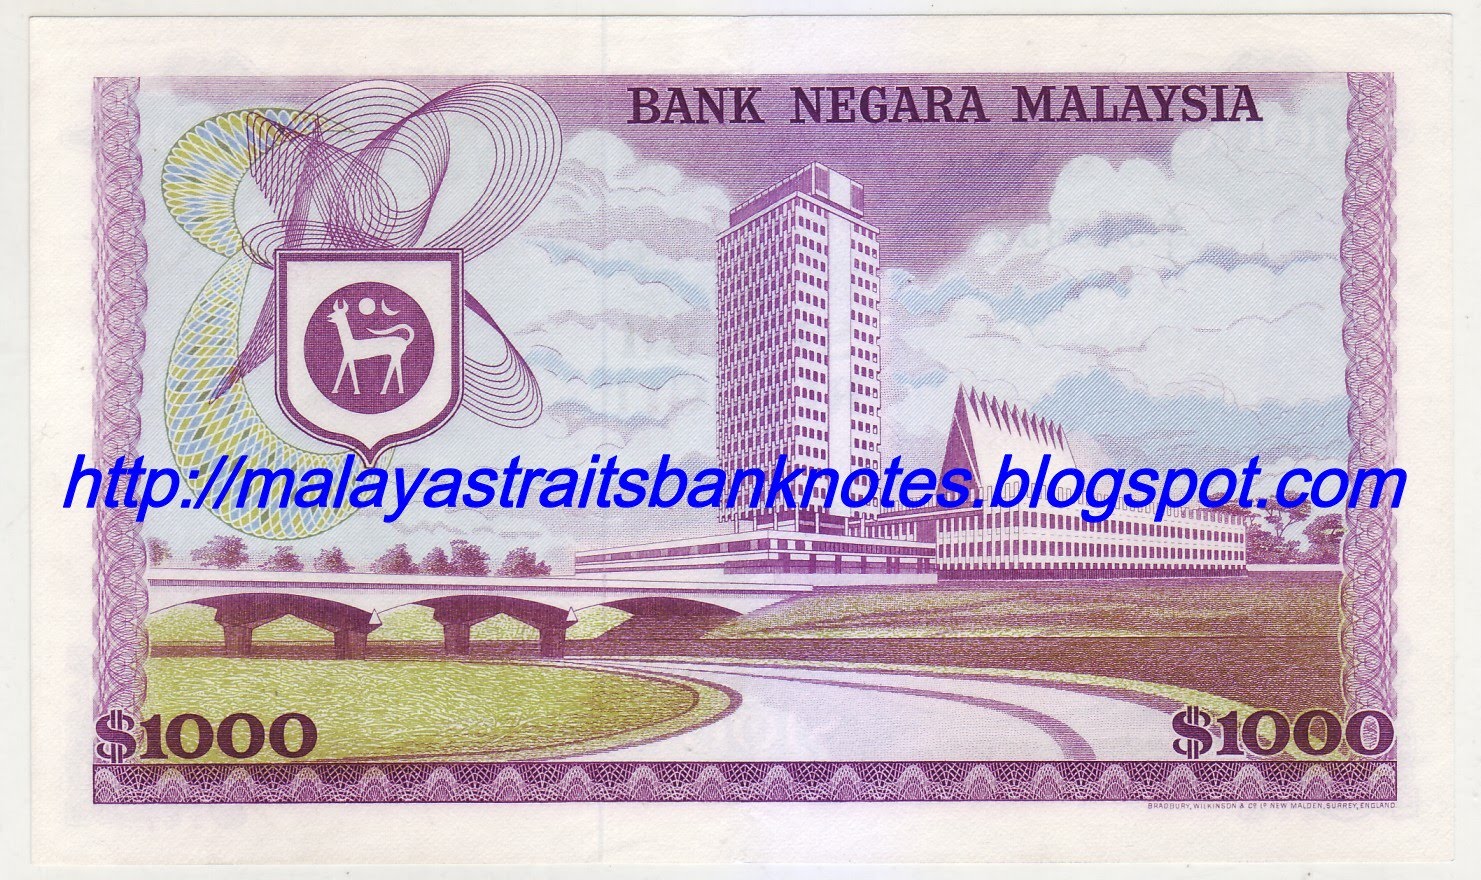 Banknotes From British Malaya and Malaysia (Contact Us If U Have